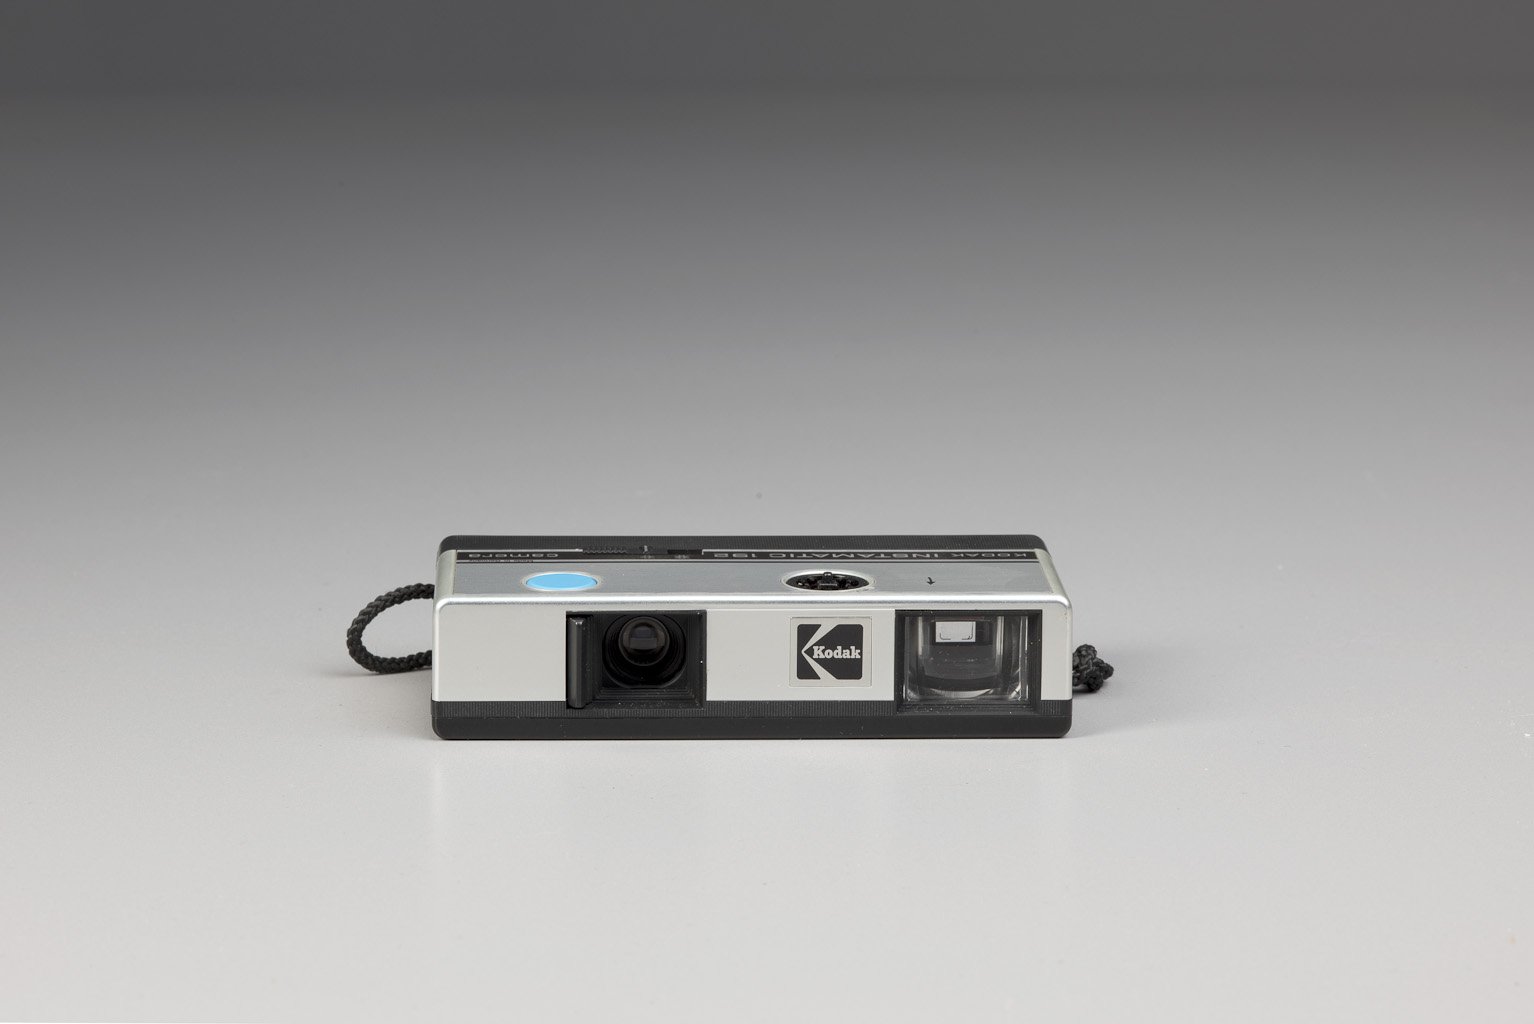 Pocketkamera Kodak Instamatic 192 (Freilichtmuseum Roscheider Hof CC0)